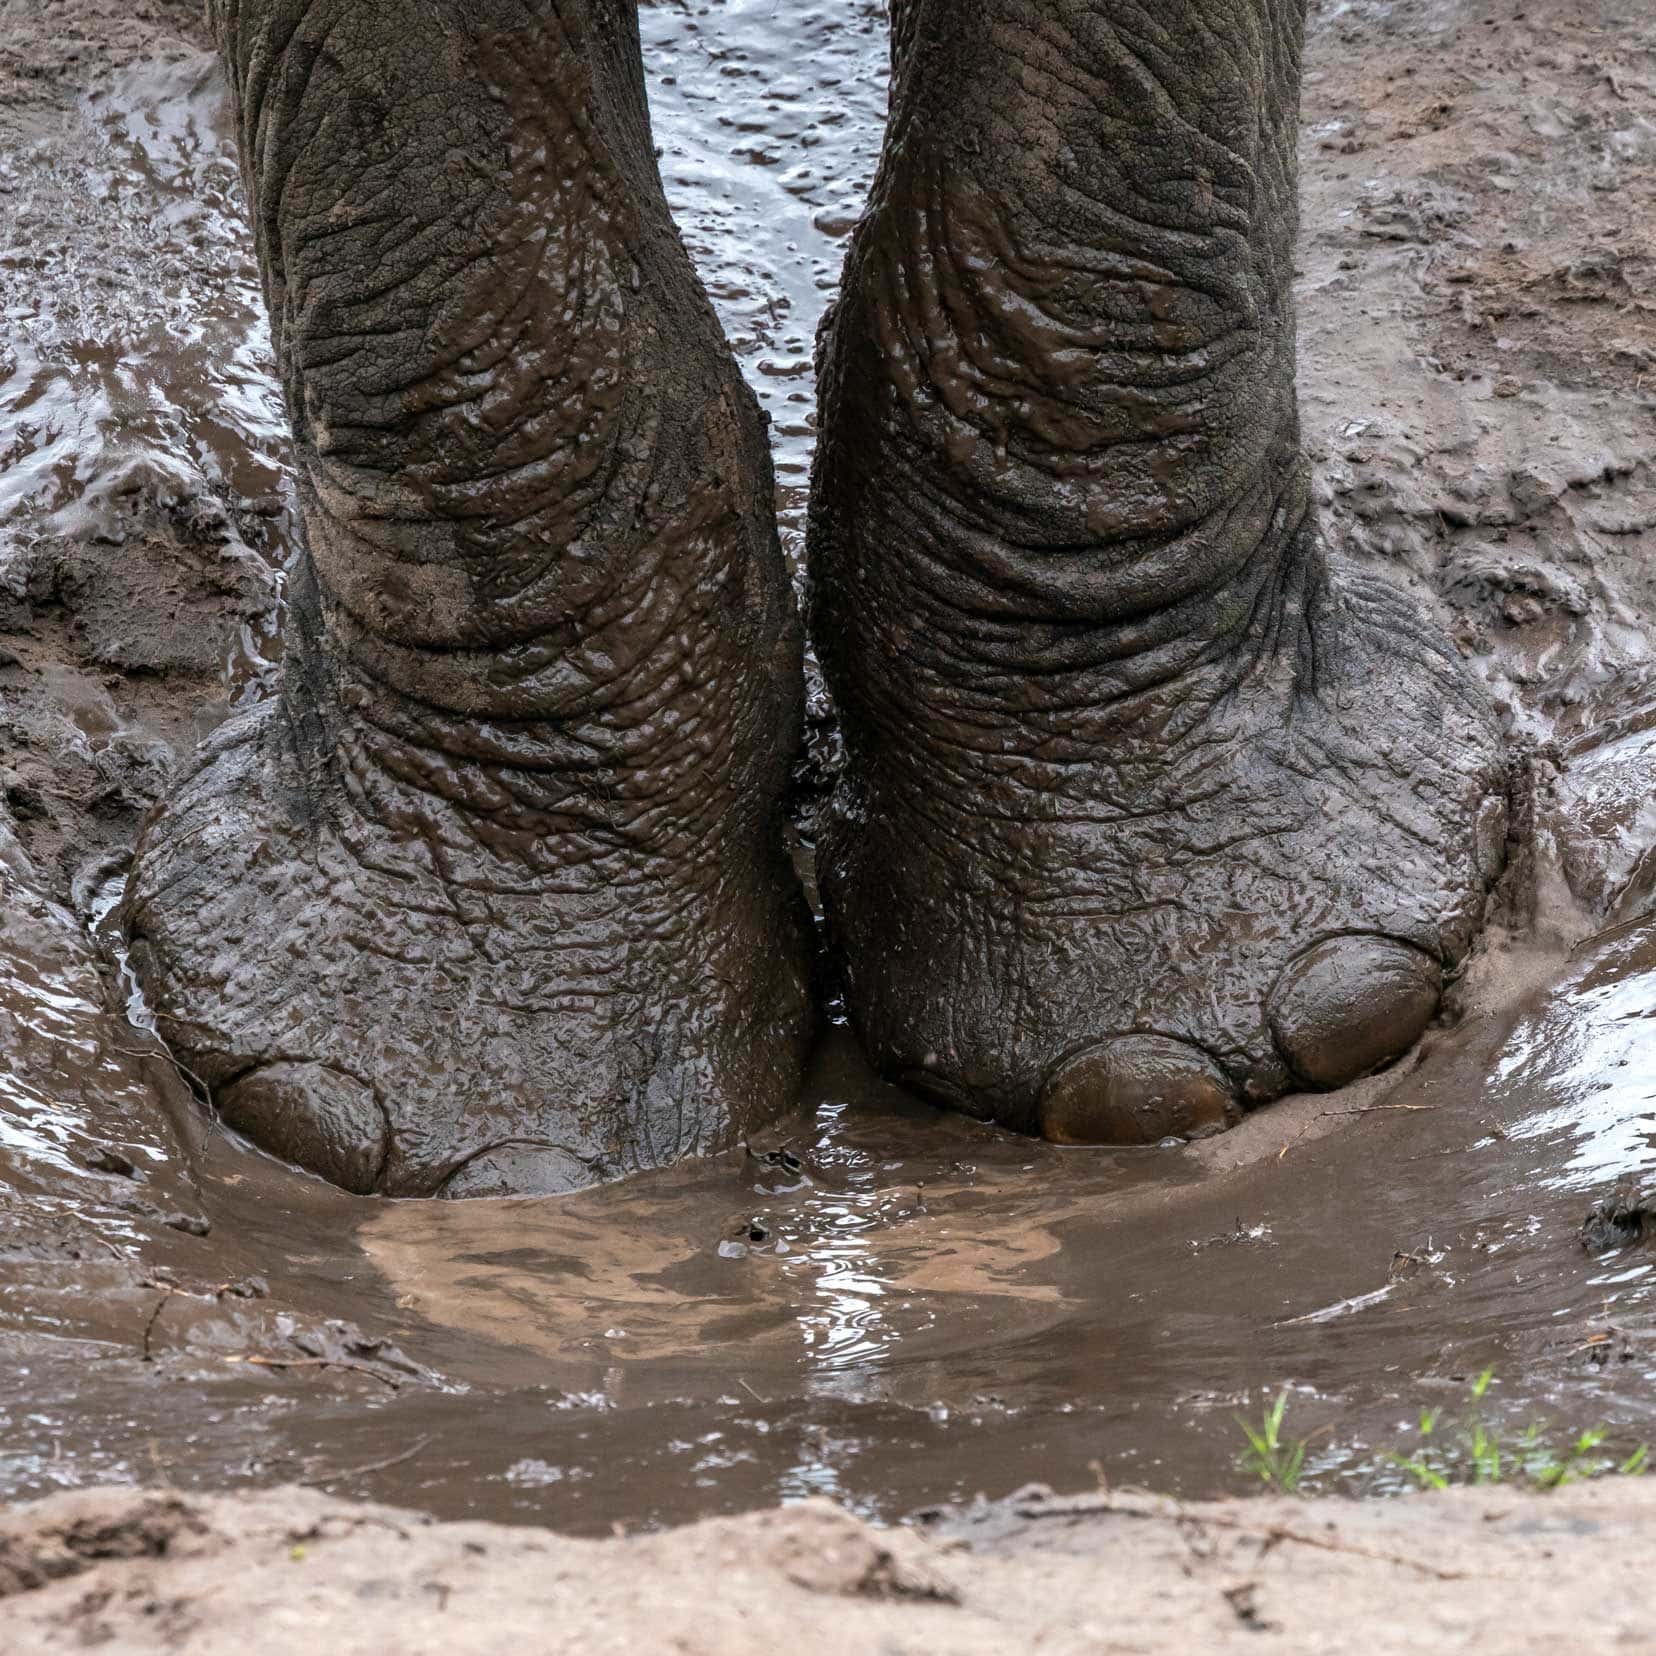 Elephant feet in the mud at Tembe Elephant Park